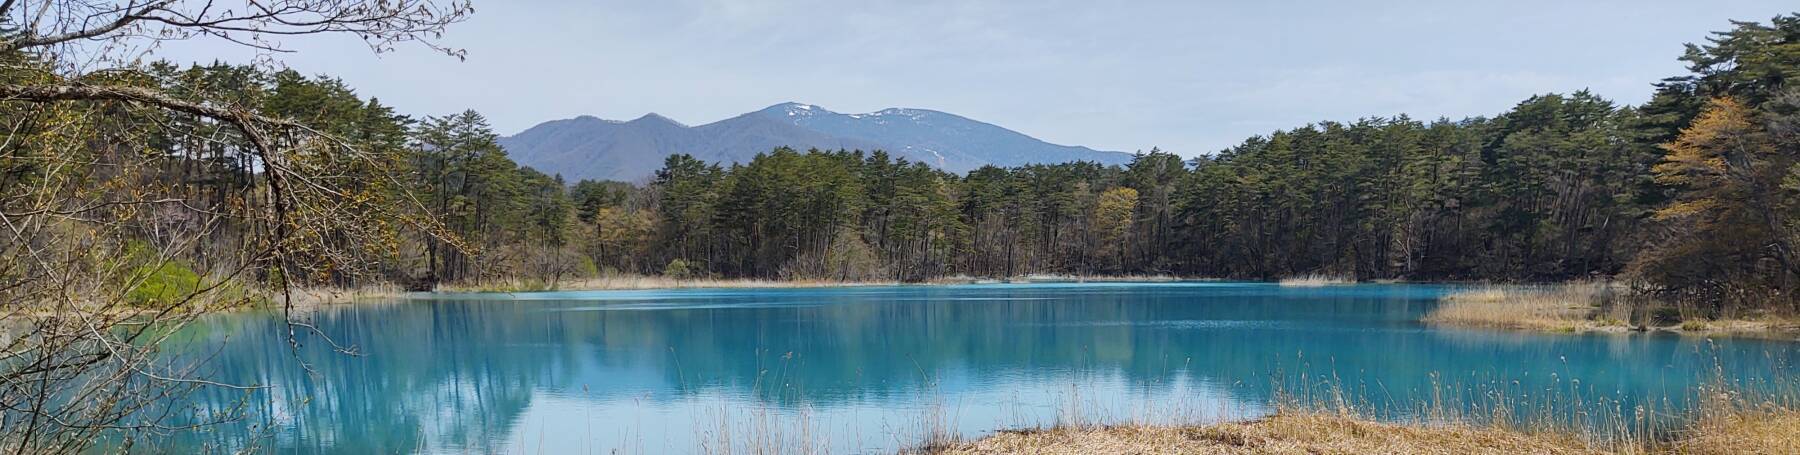 Benten-numa Pond, one of the Five-Colored Lakes or Goshi-ki-numa on the north slopes of Mount Bandai.